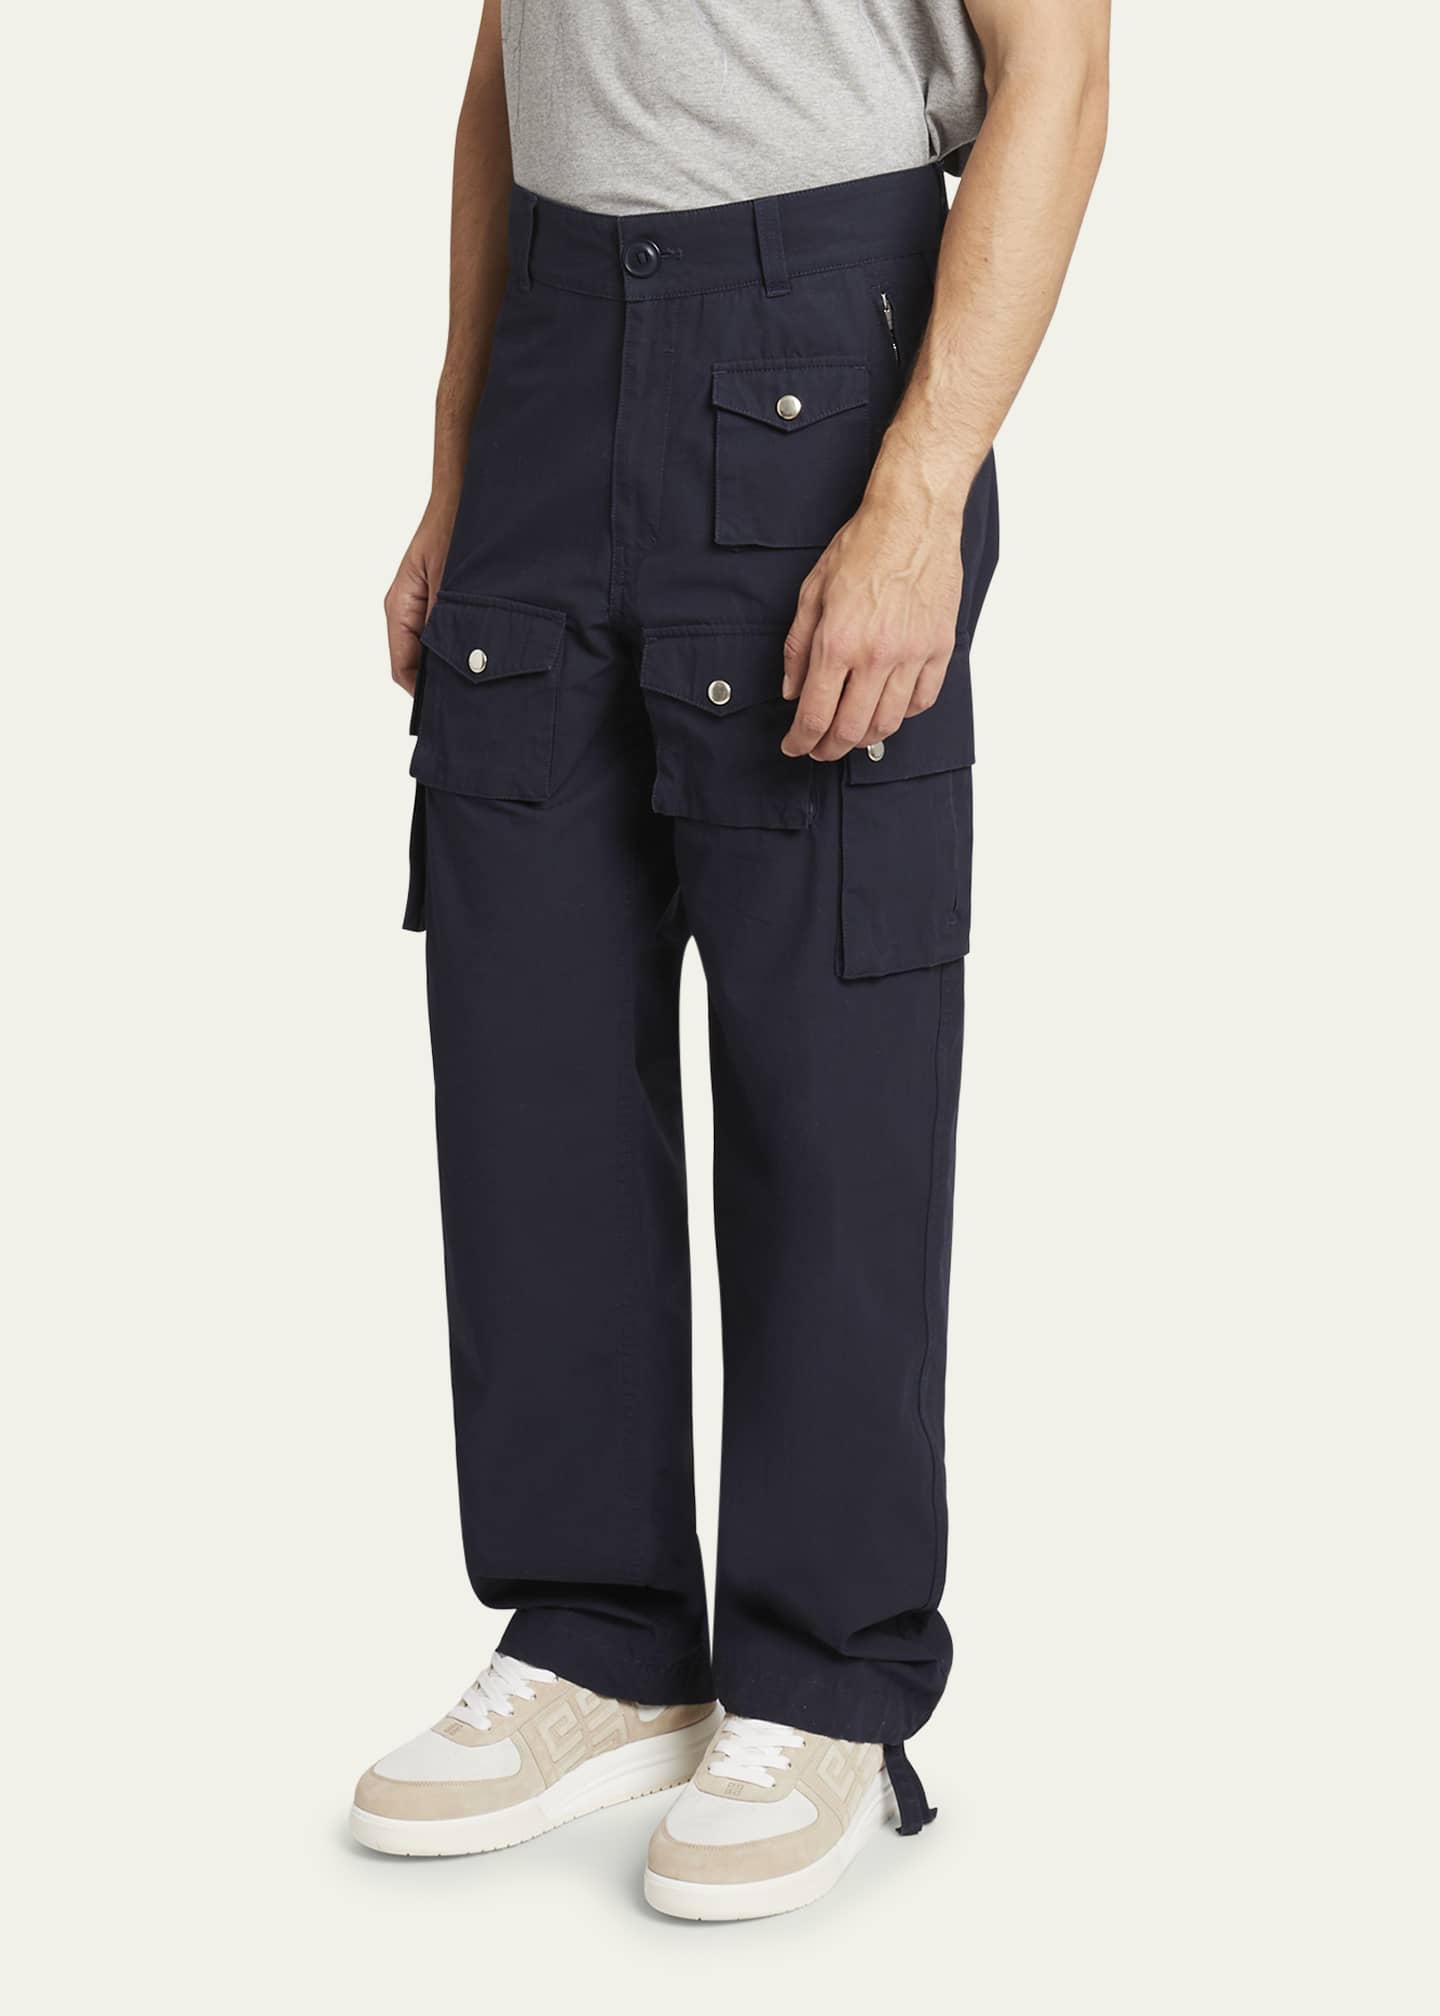 Givenchy Men's Multi-Pocket Cotton Ripstop Cargo Pants